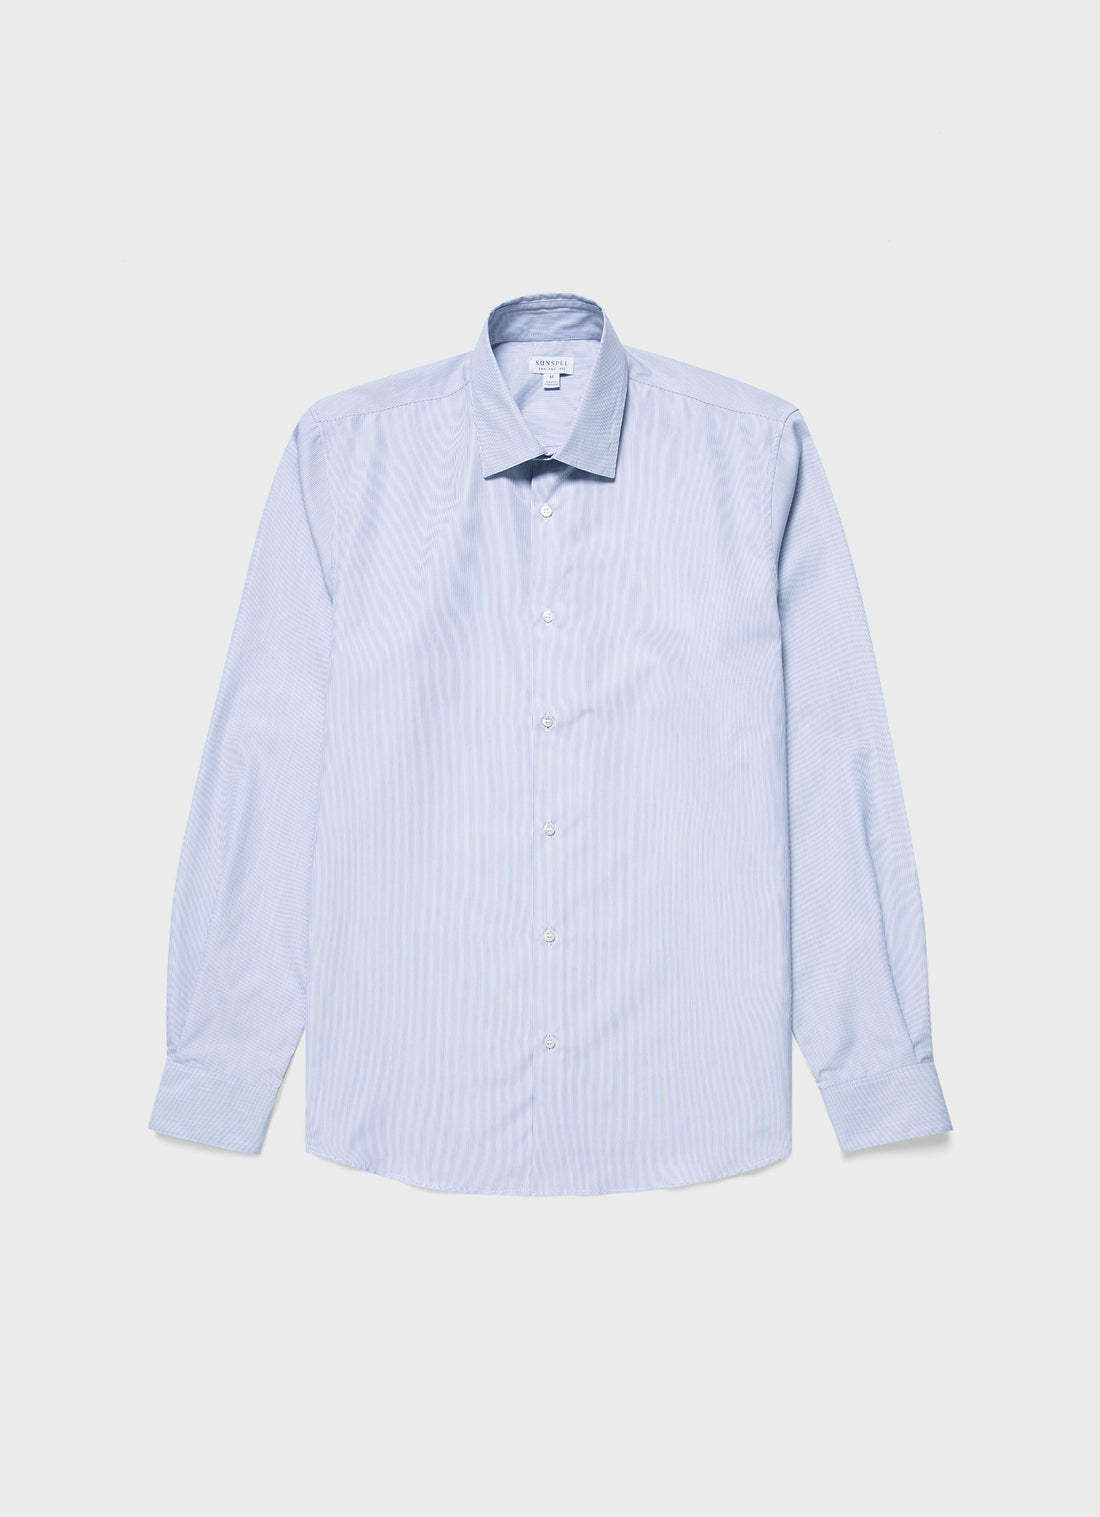 Men's Sea Island Cotton Shirt in Navy/White Fine Stripe